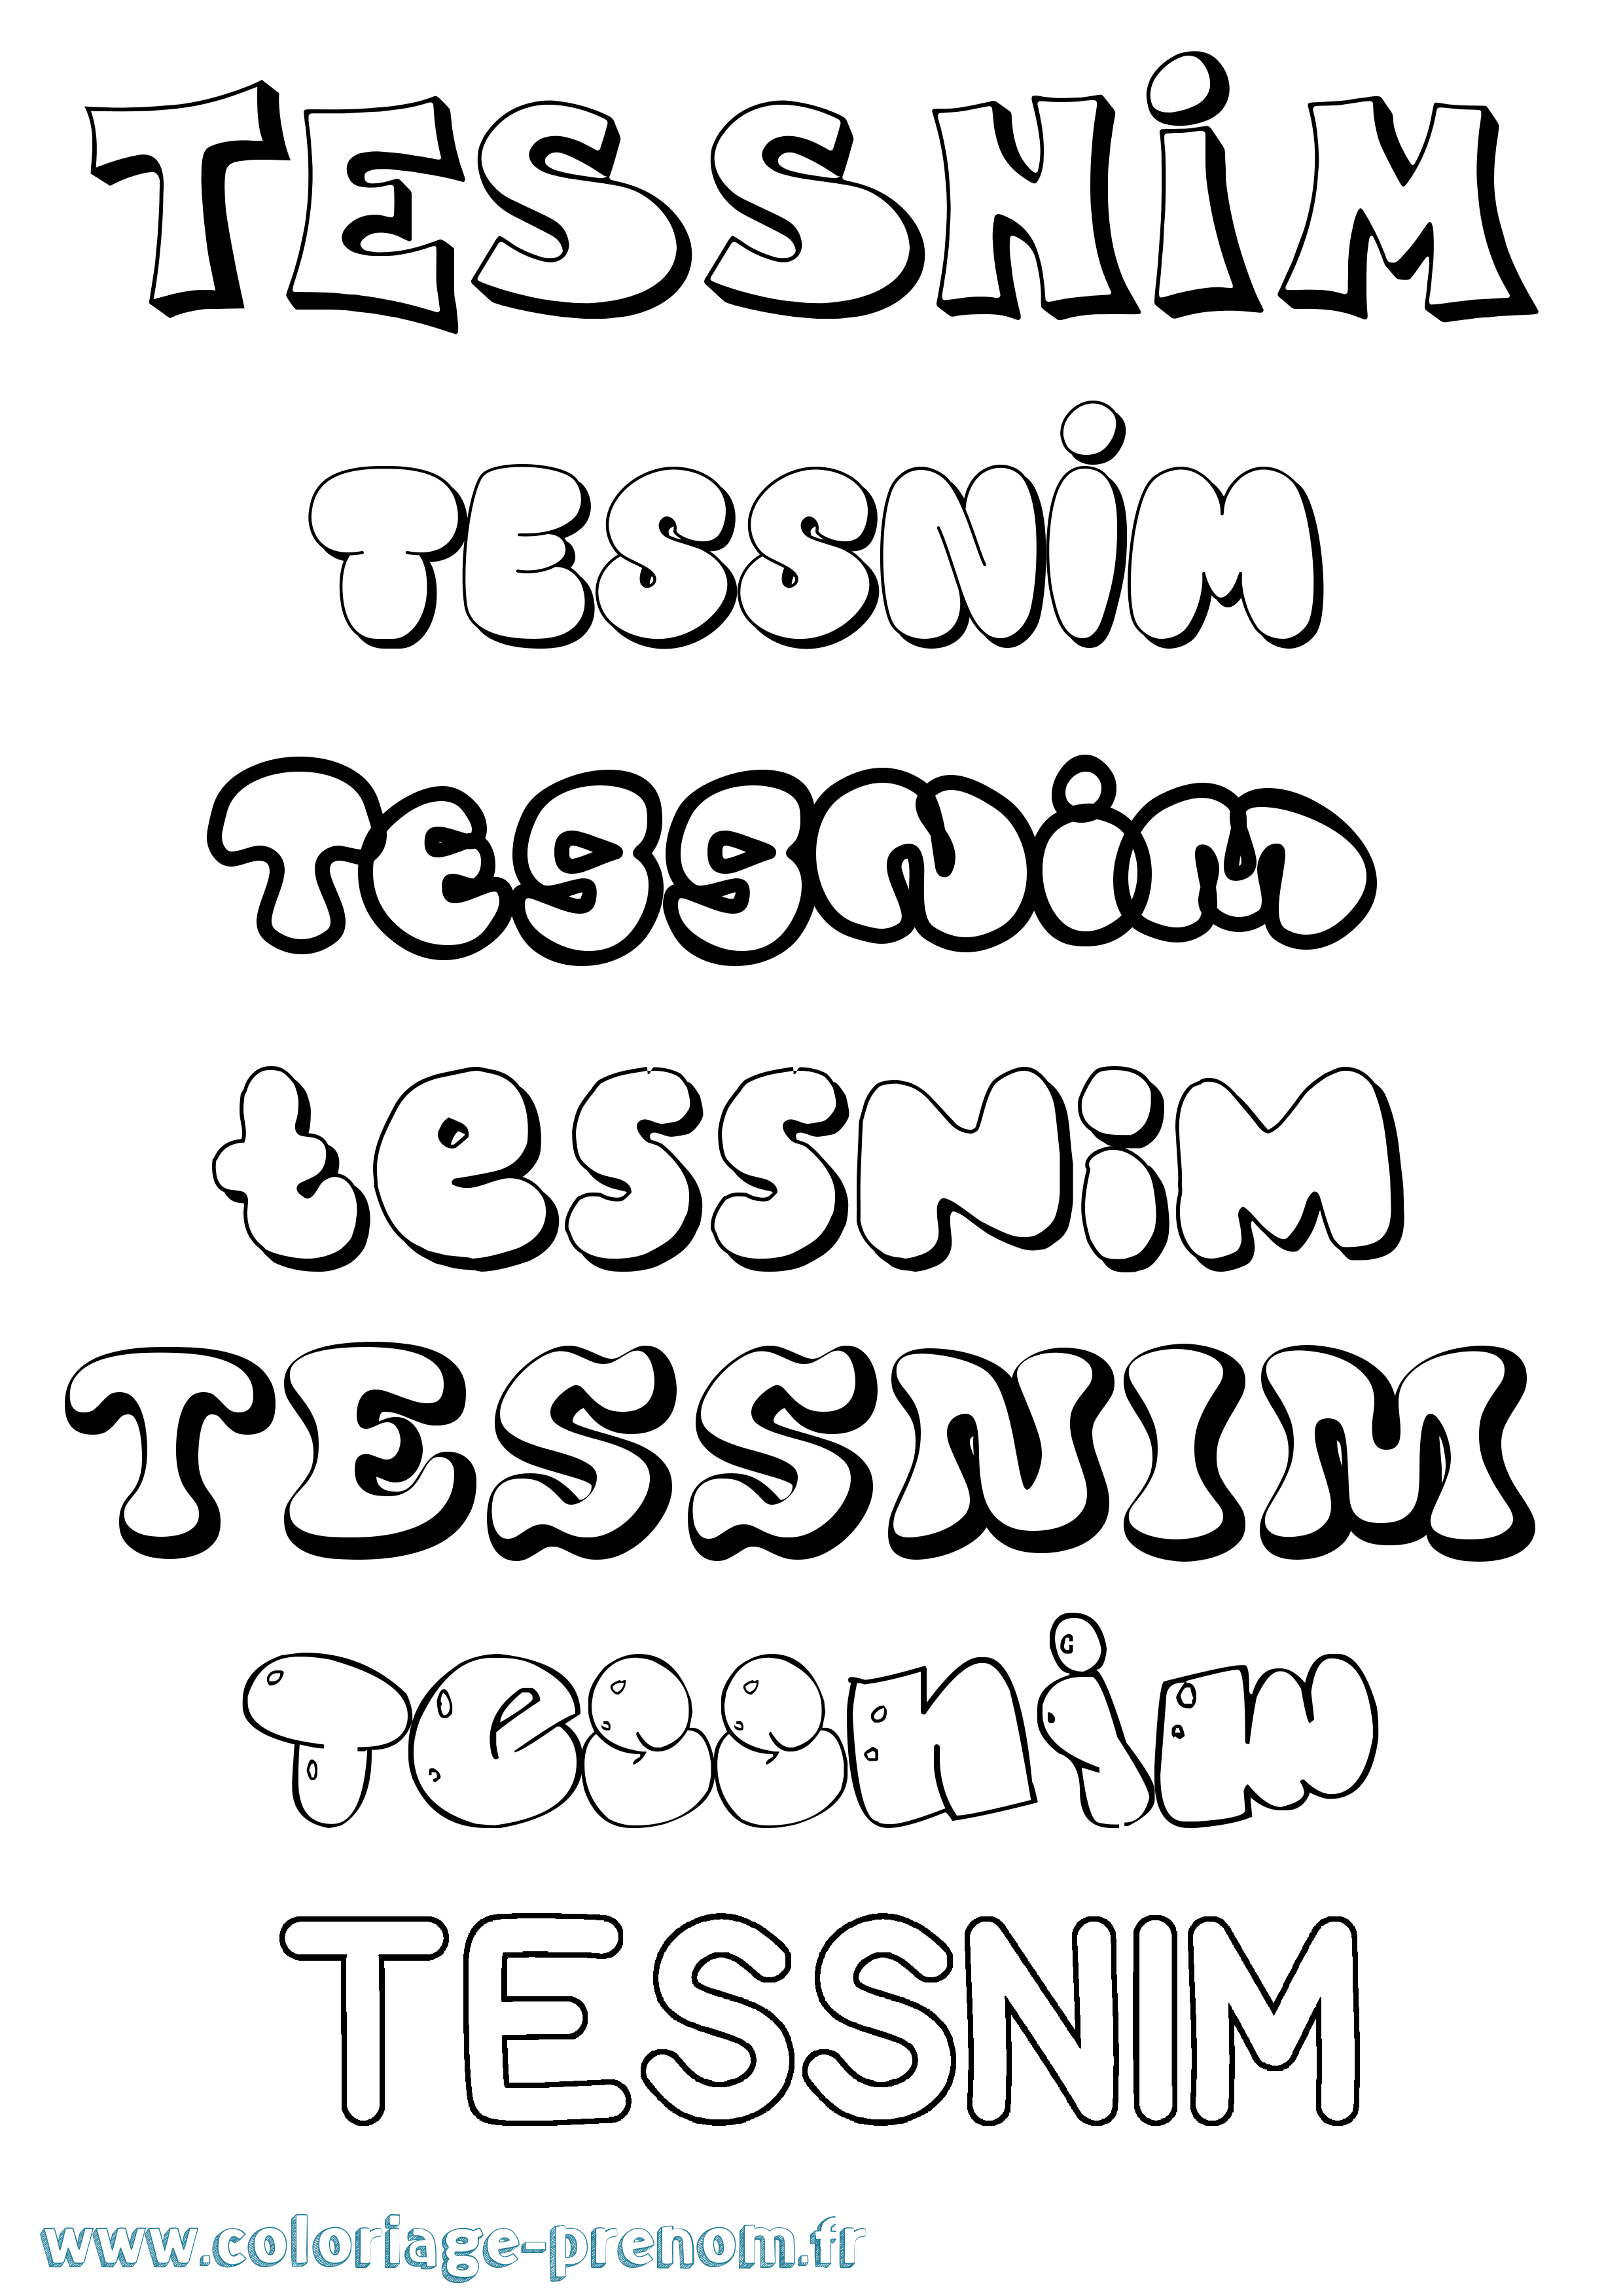 Coloriage prénom Tessnim Bubble